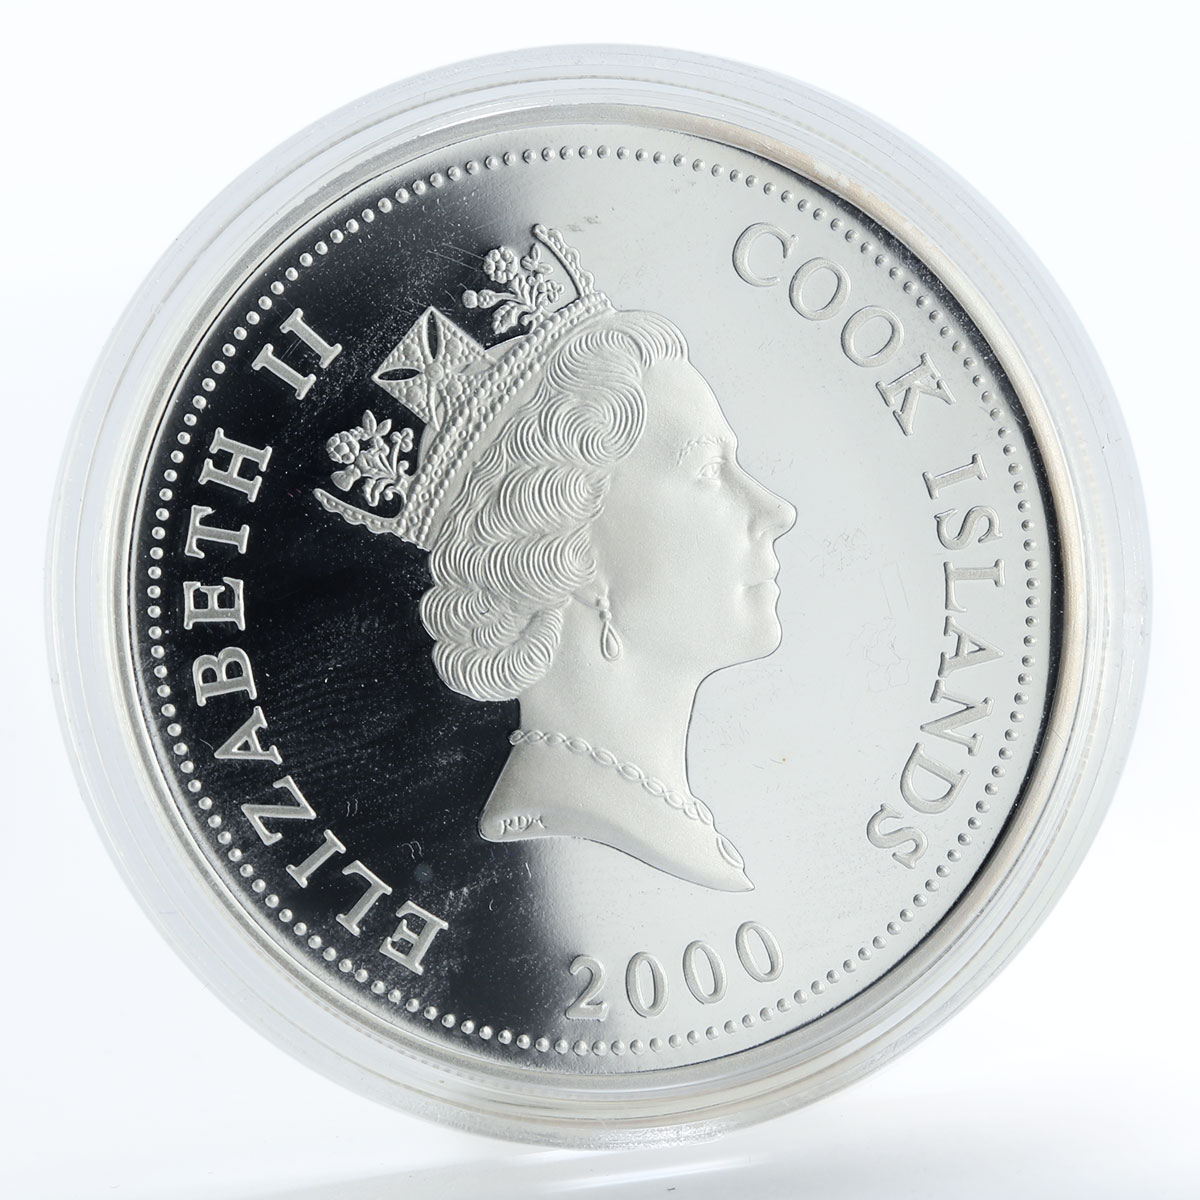 Cook Islands 1 dollar Jewel Beetle proof silver coin 2000